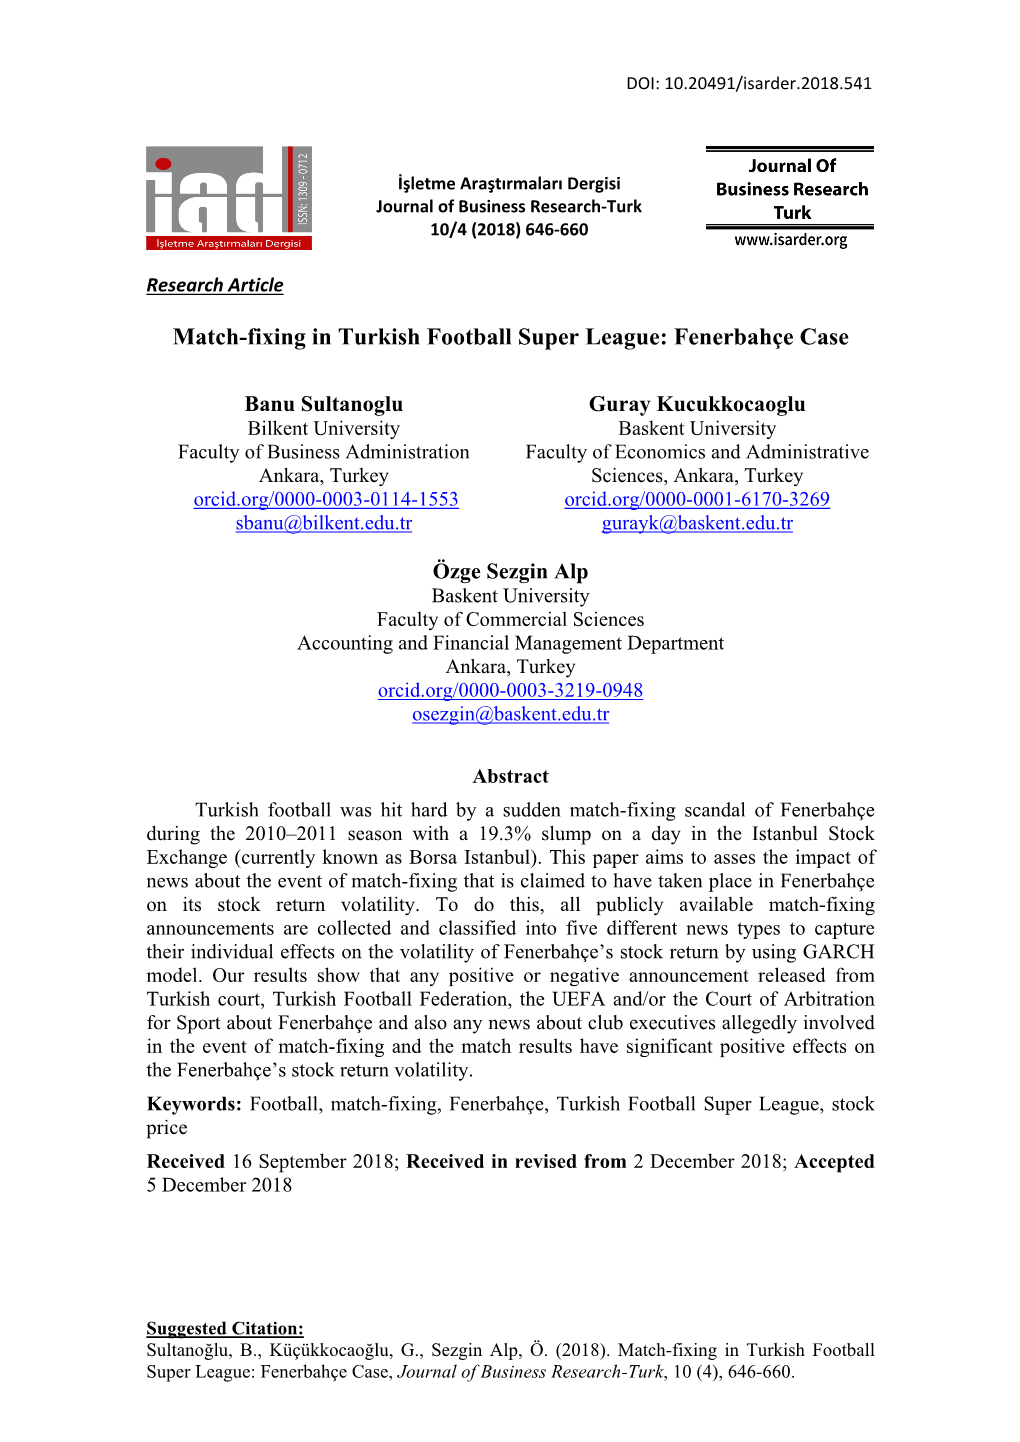 Match-Fixing in Turkish Football Super League: Fenerbahçe Case